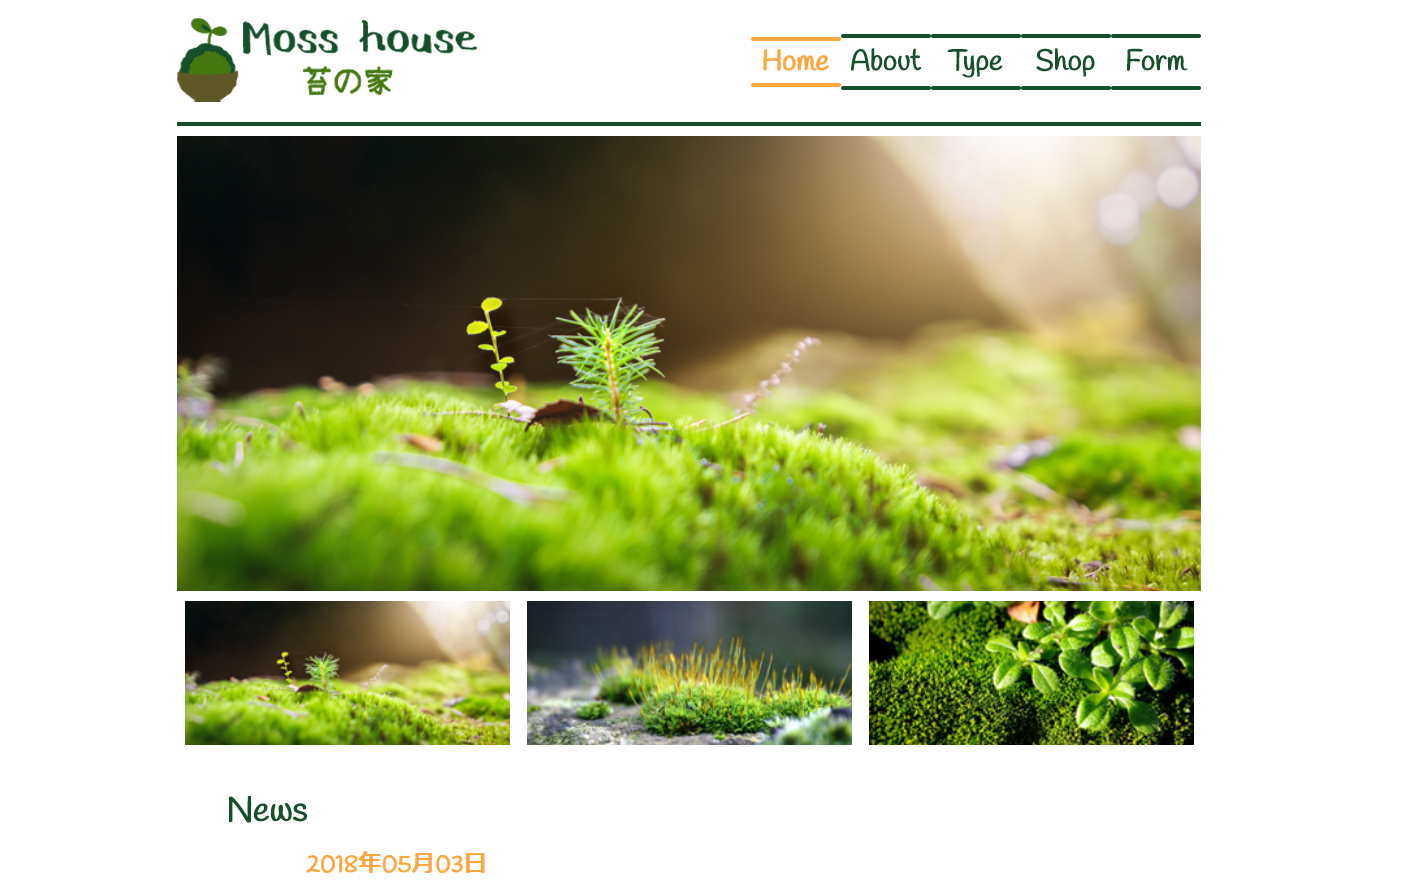 Moss house